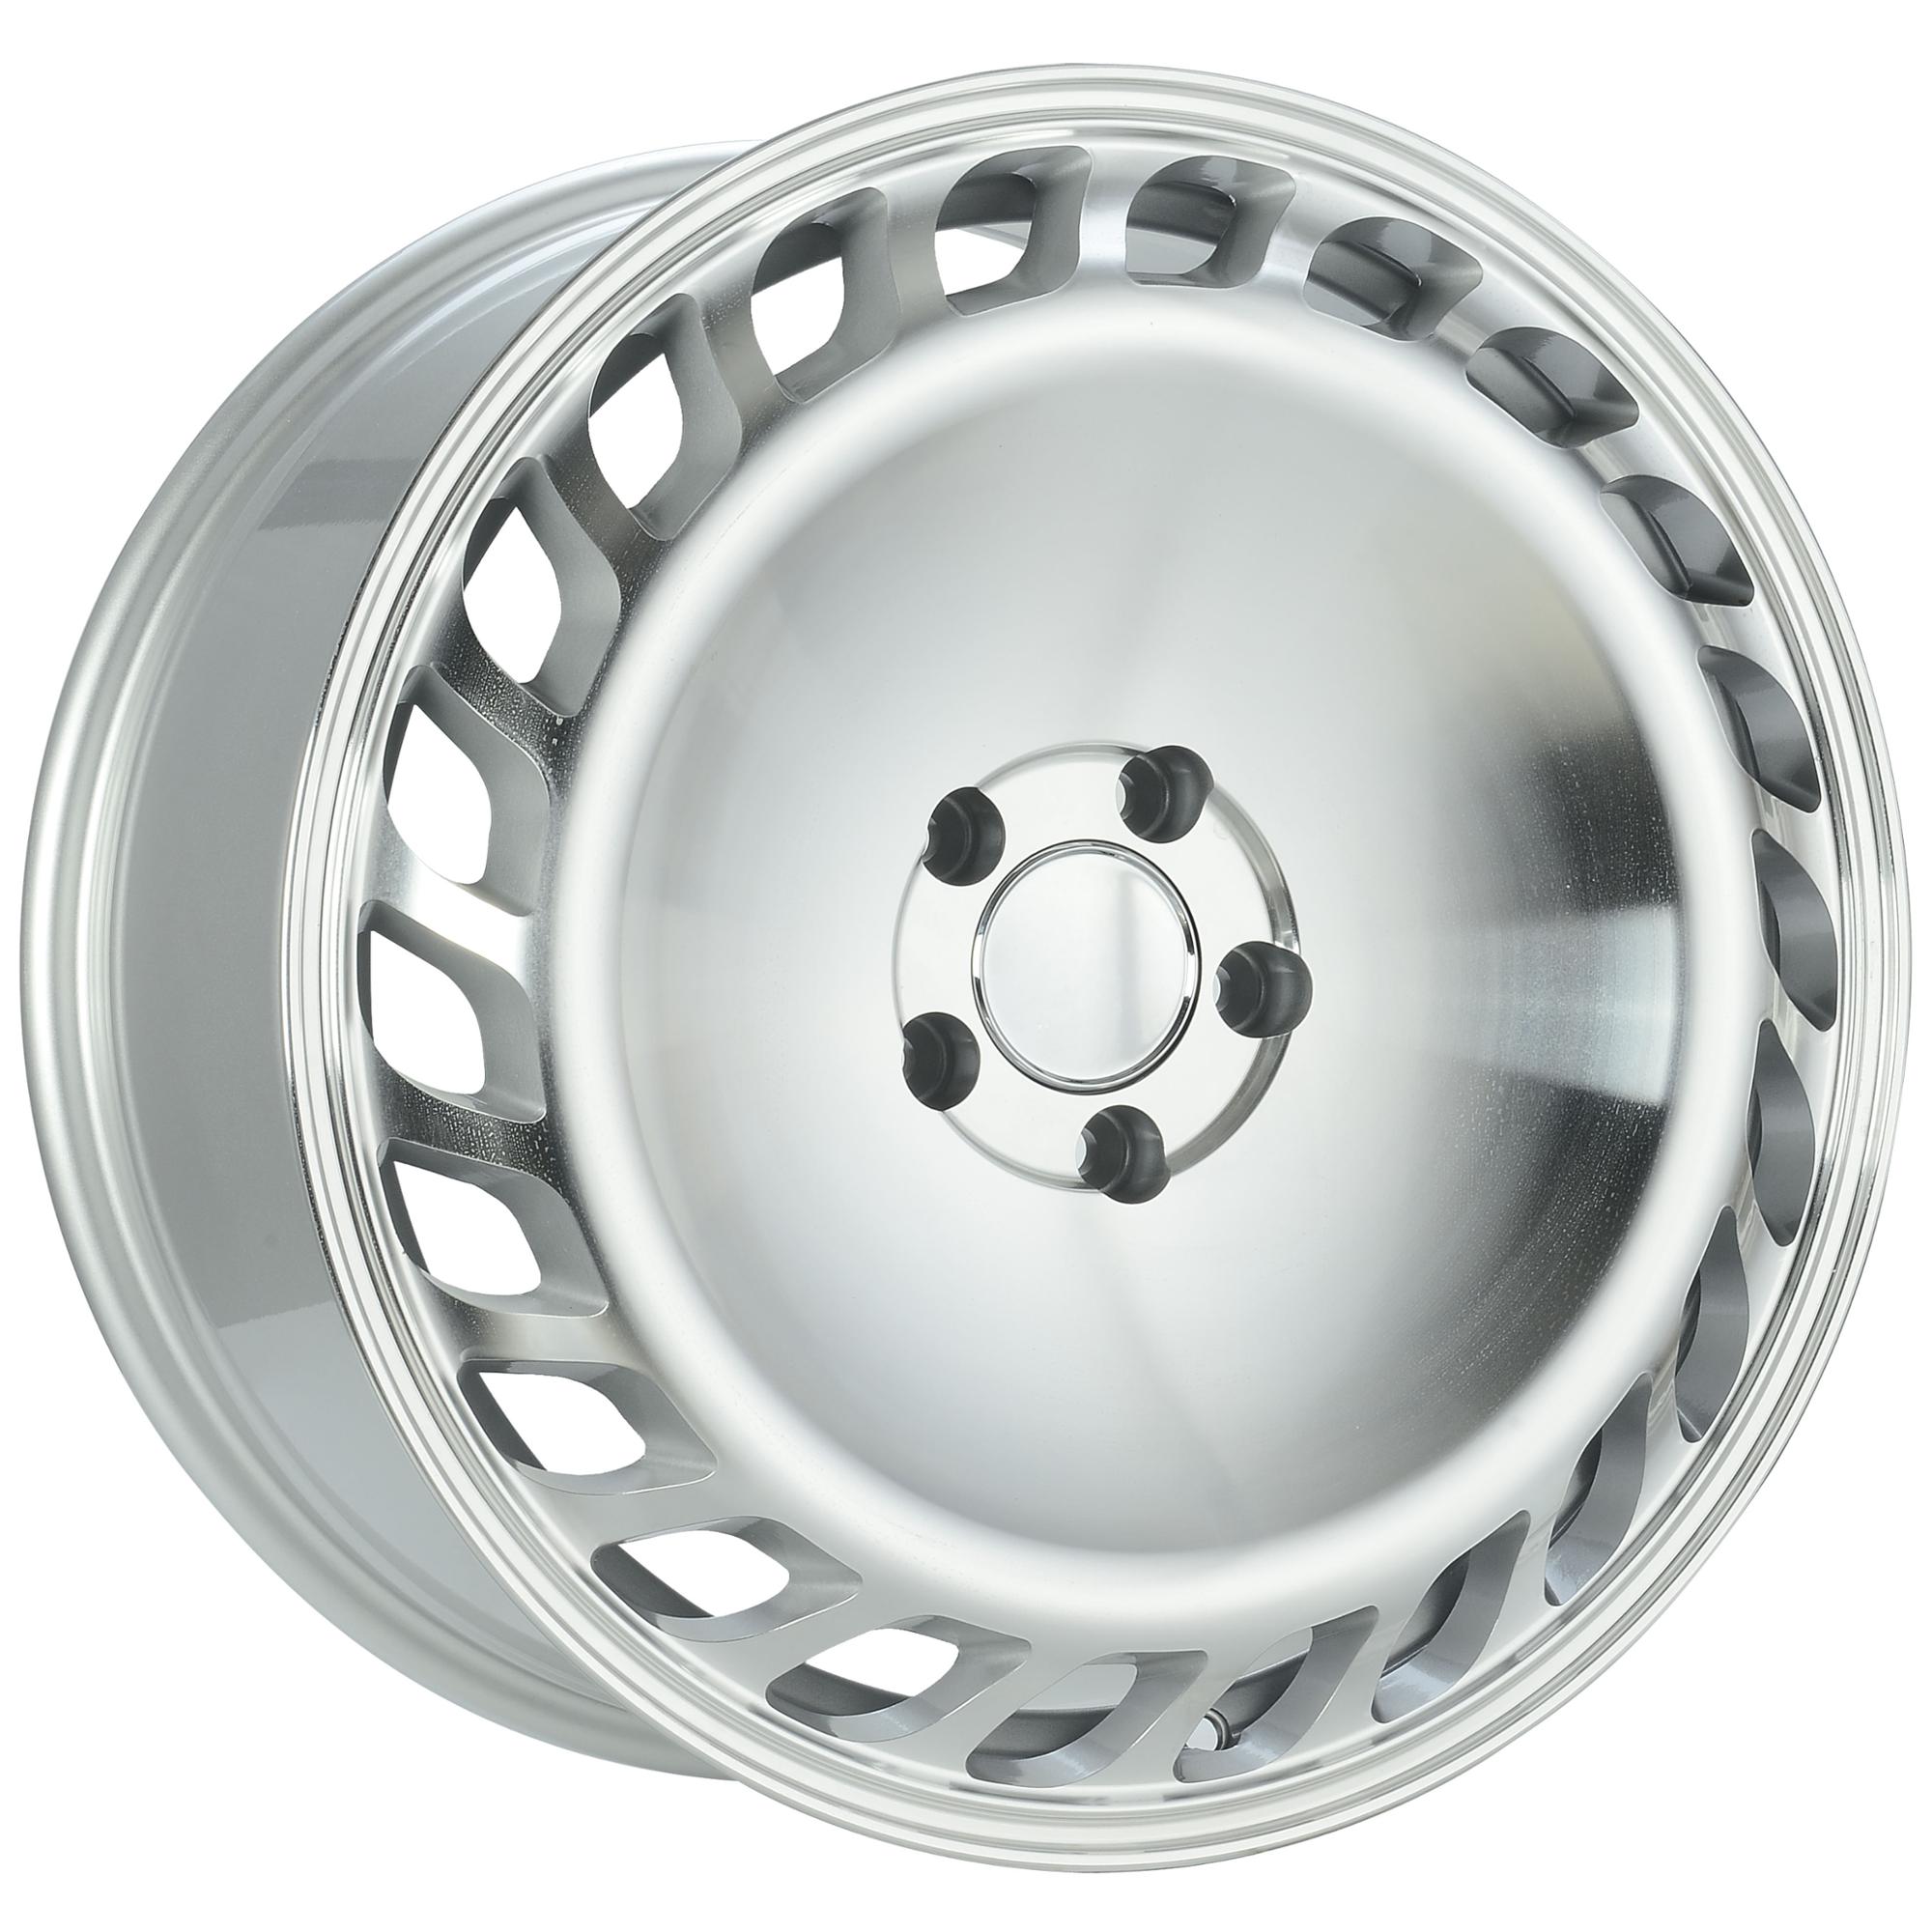 Hot selling High Quality car alloy wheel rim for 17*7.5, 19*8.5 inch